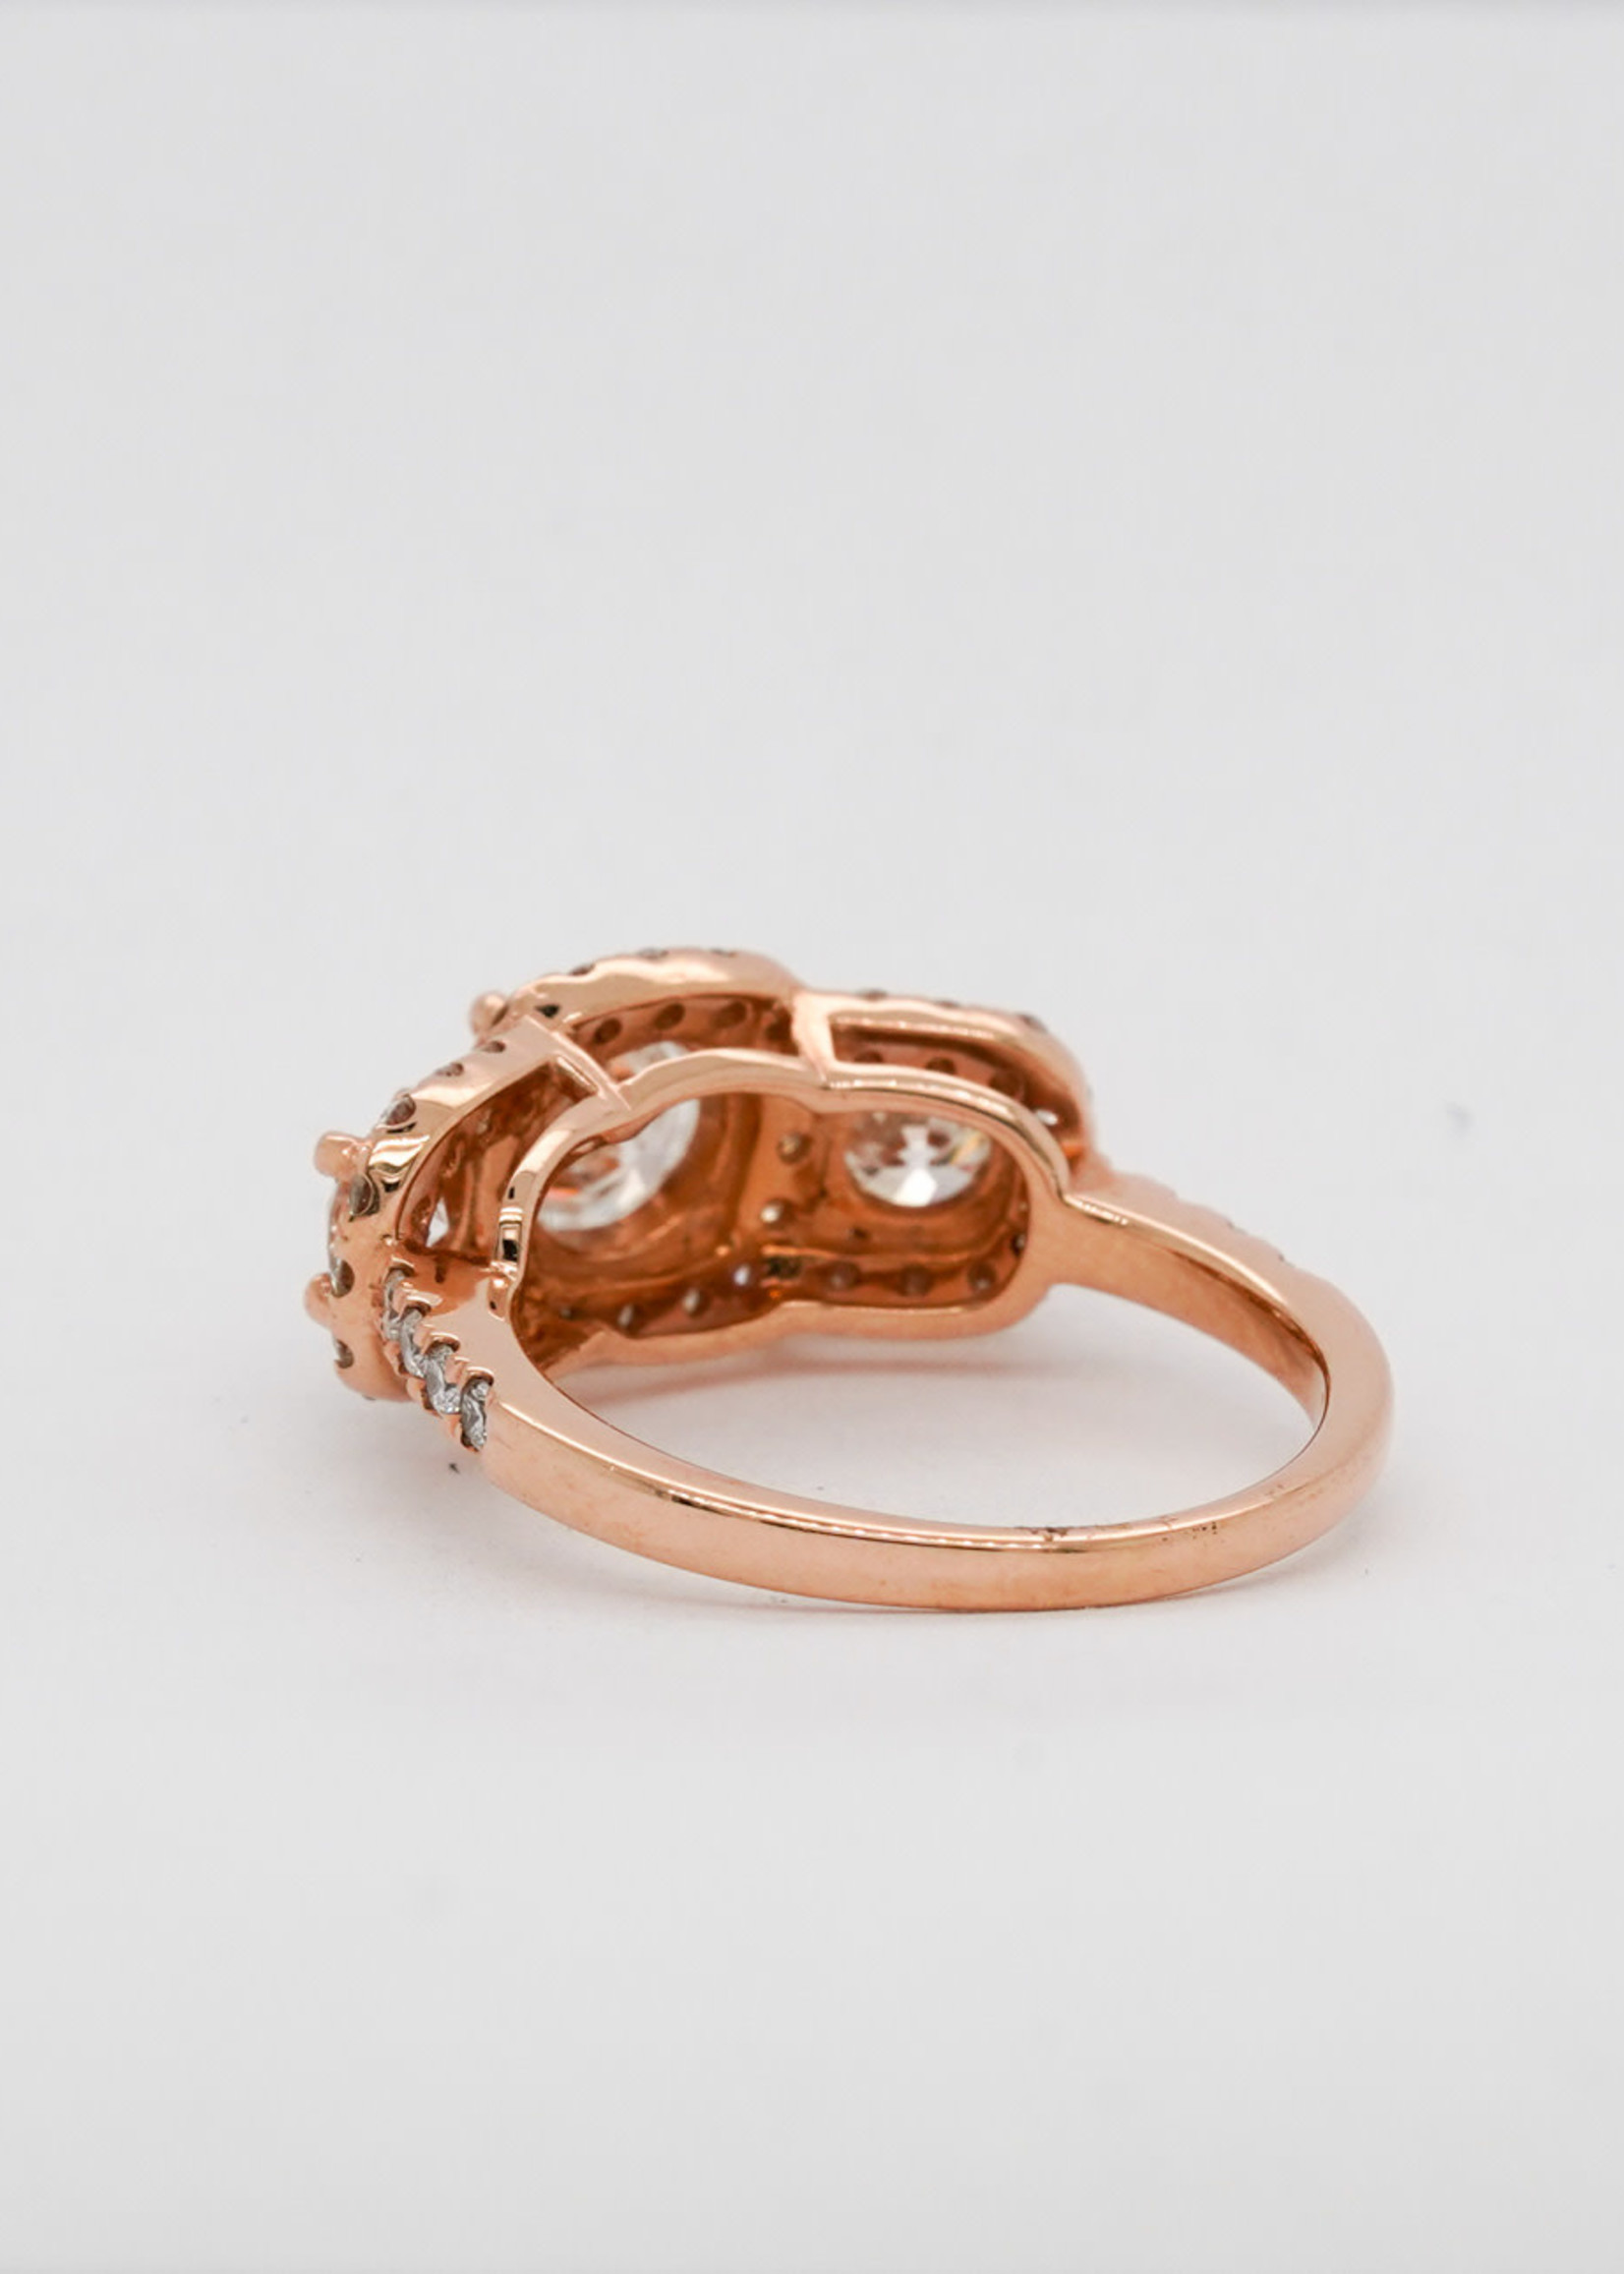 14KR 3.26g 1.75ctw ( .70ctr) I/I1 Old European Cut Diamond Three Stone Halo Engagement Ring (size 5.25)